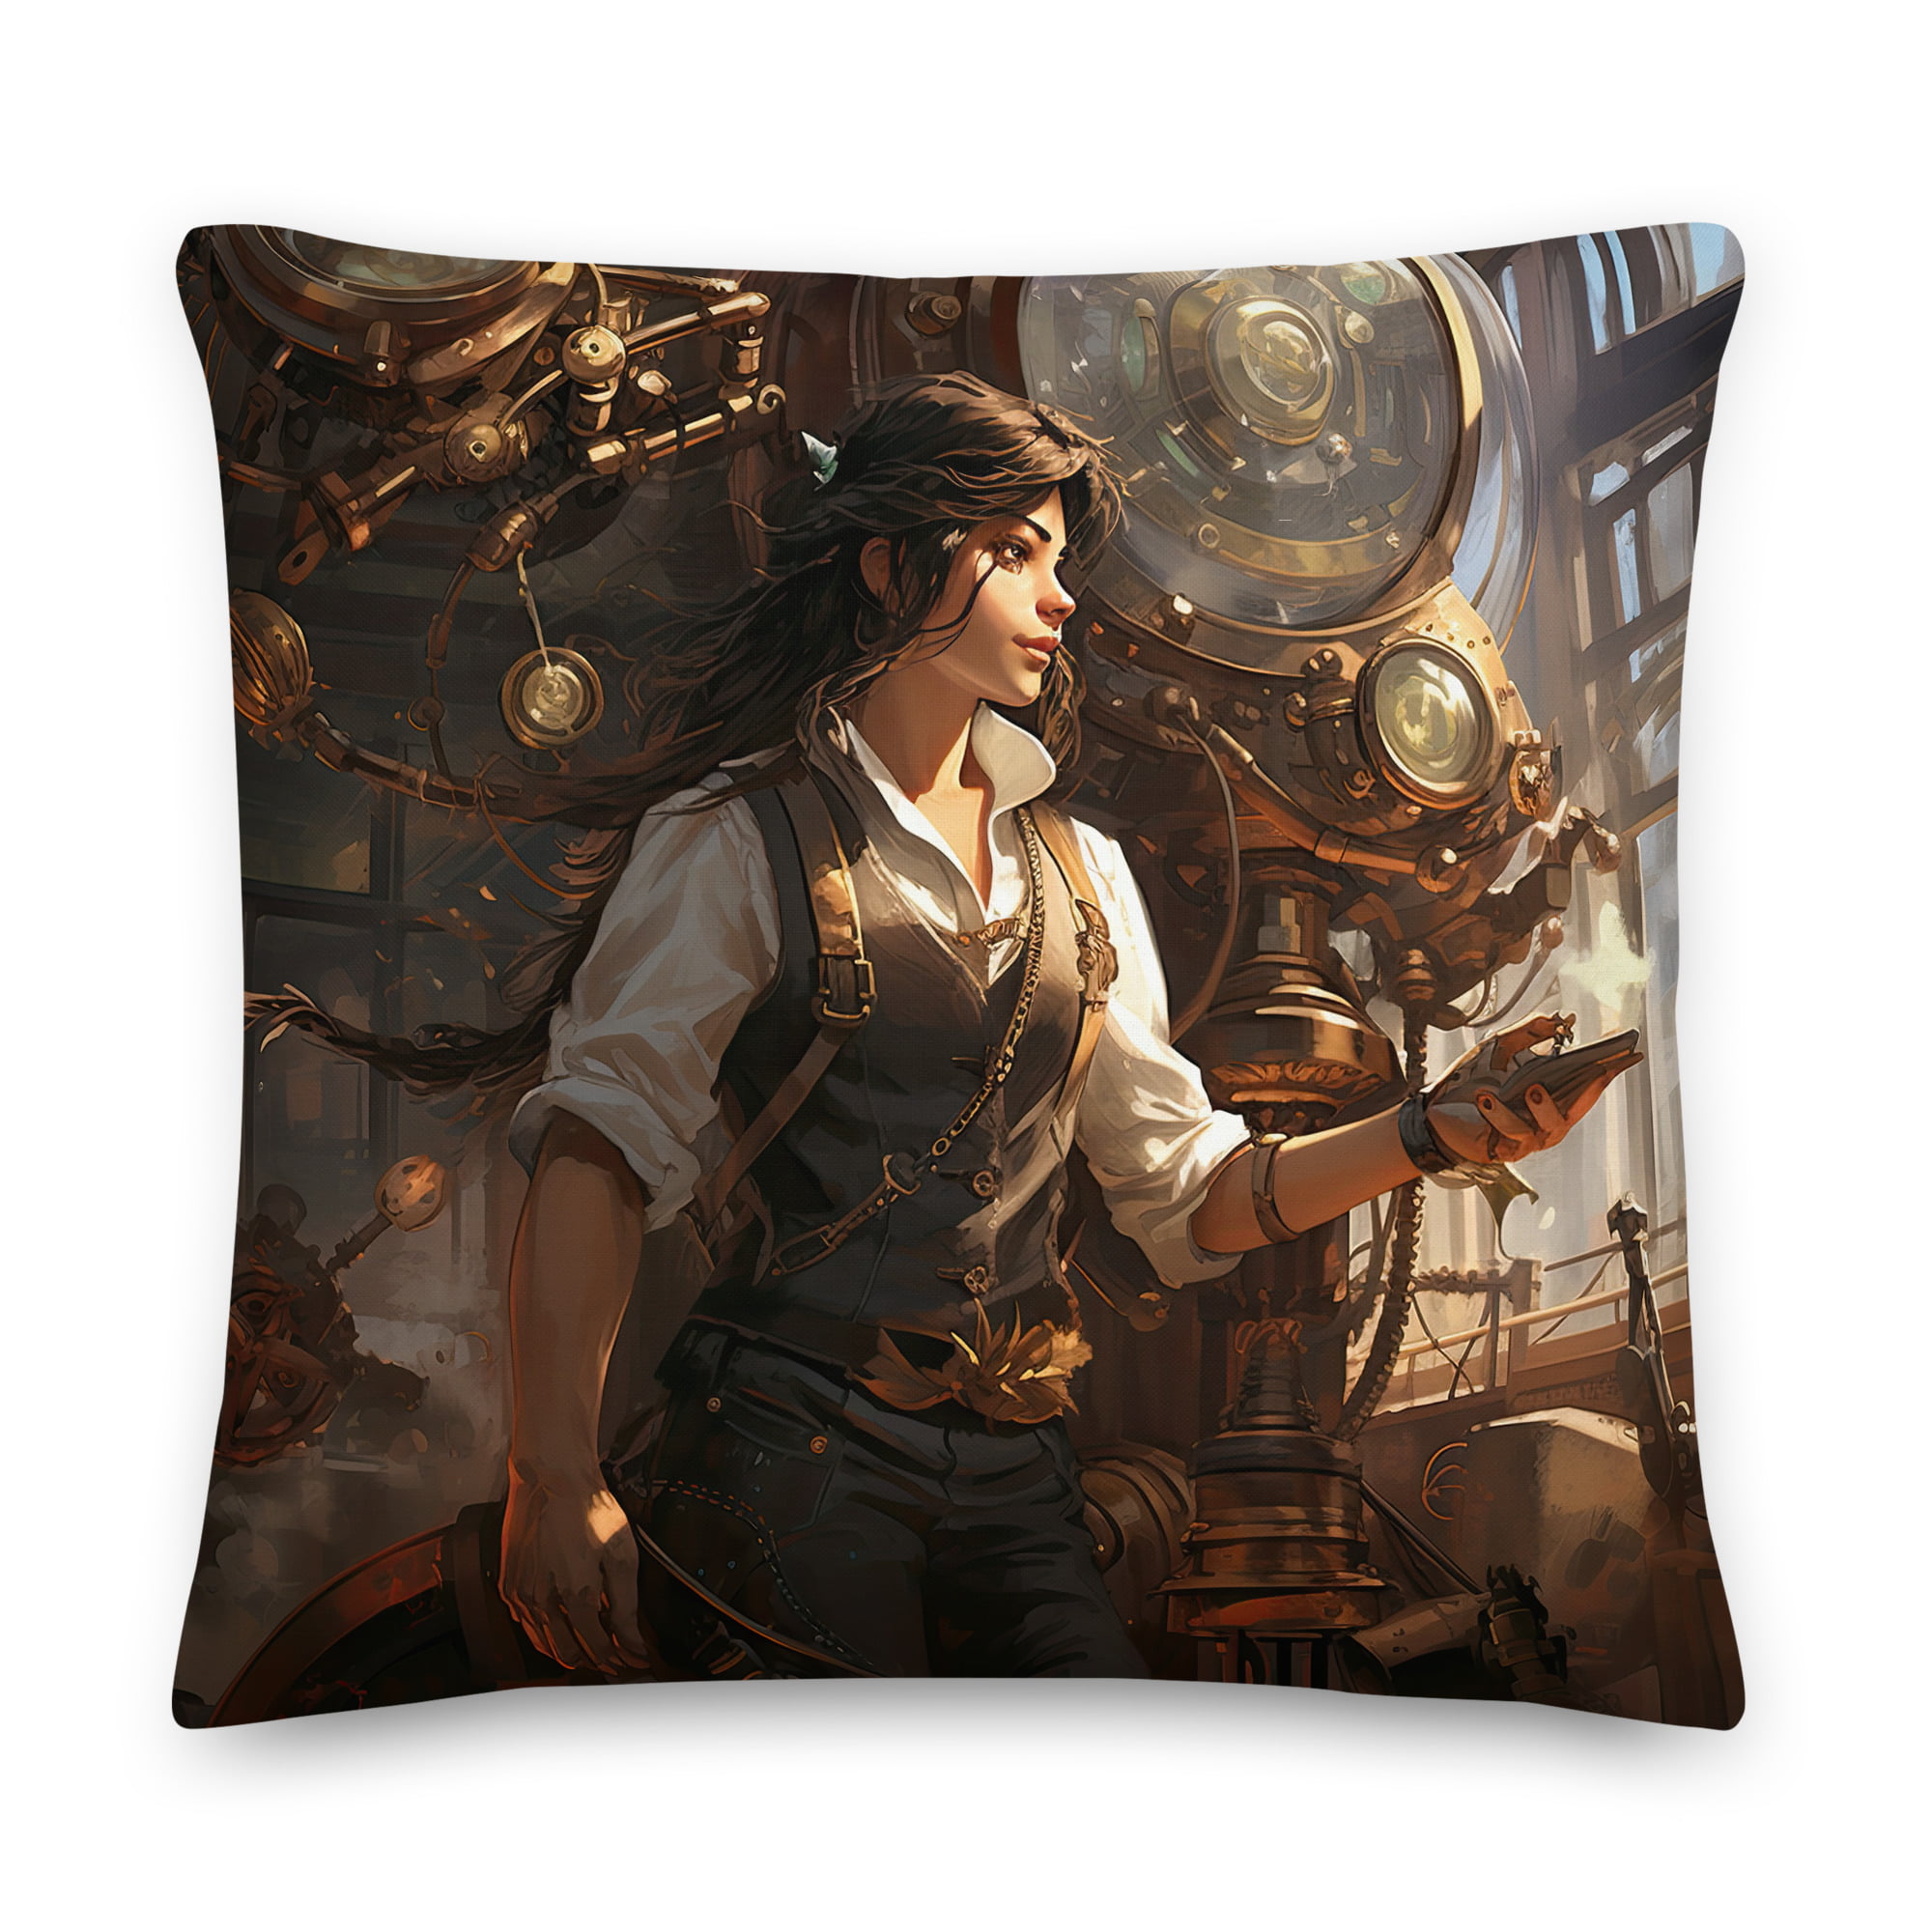 Steampunk Princess Premium Throw Pillow – 22×22